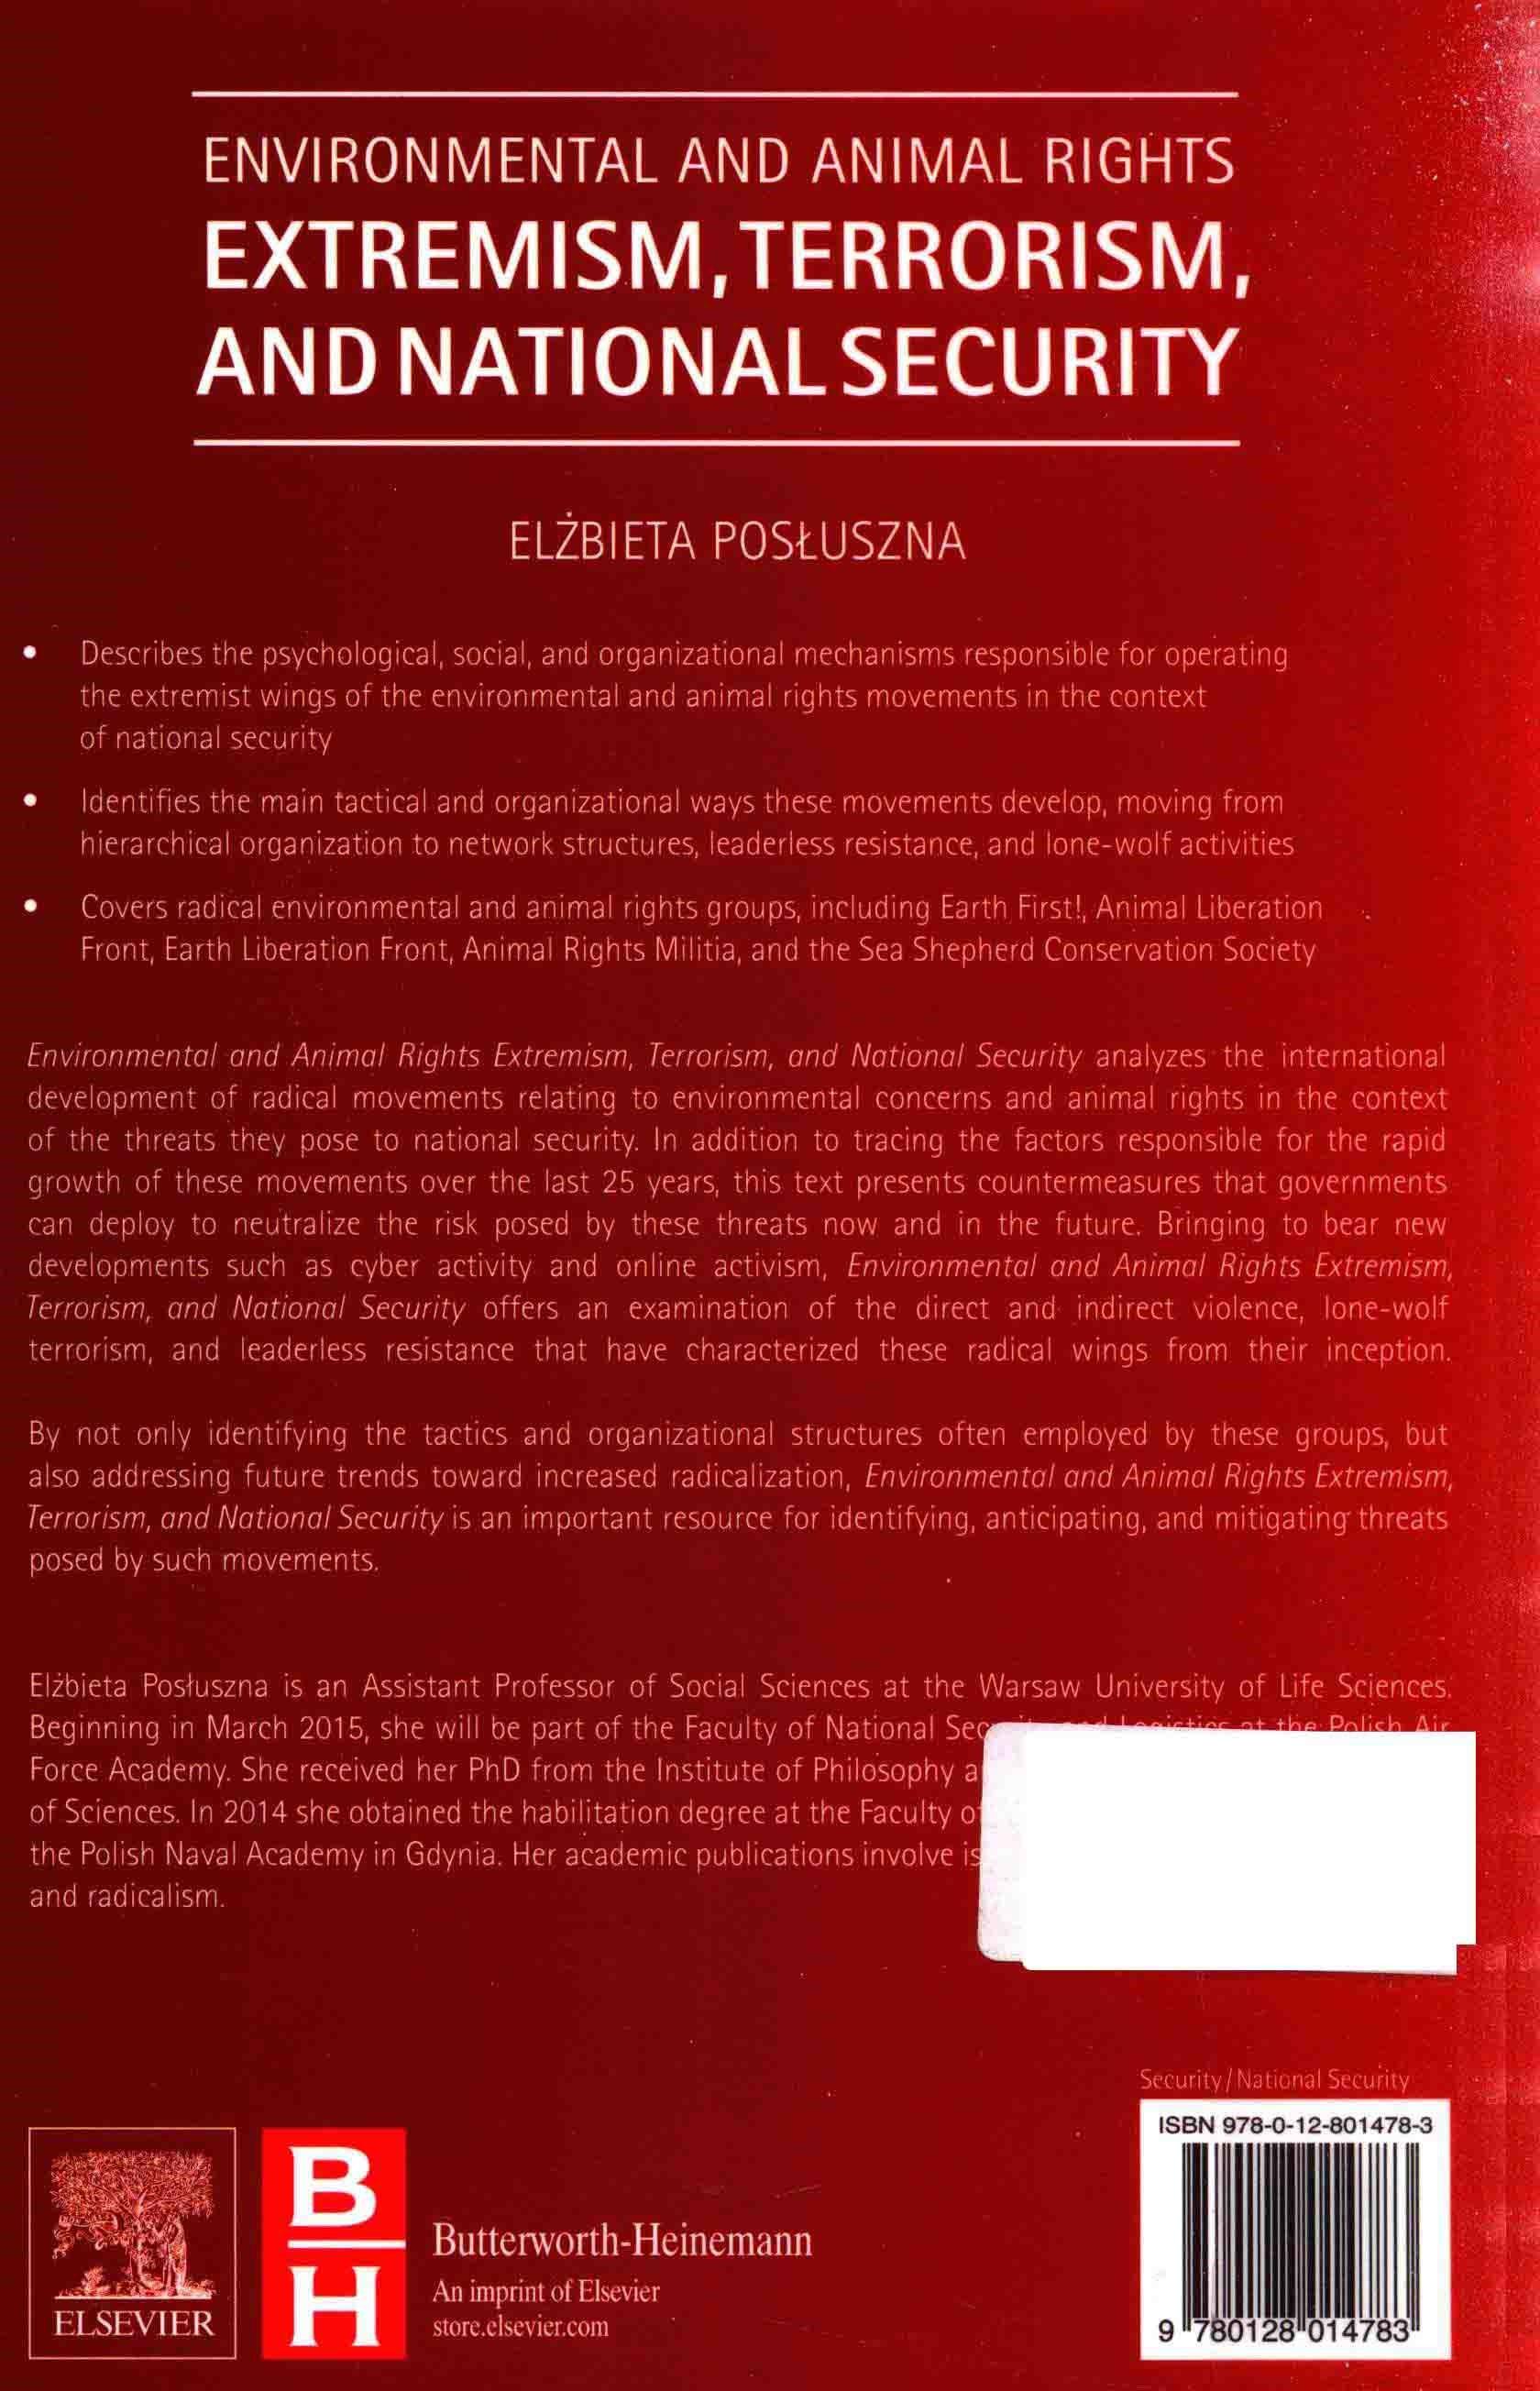 e-p-elzbieta-posluszna-environmental-and-animal-ri-12.jpg